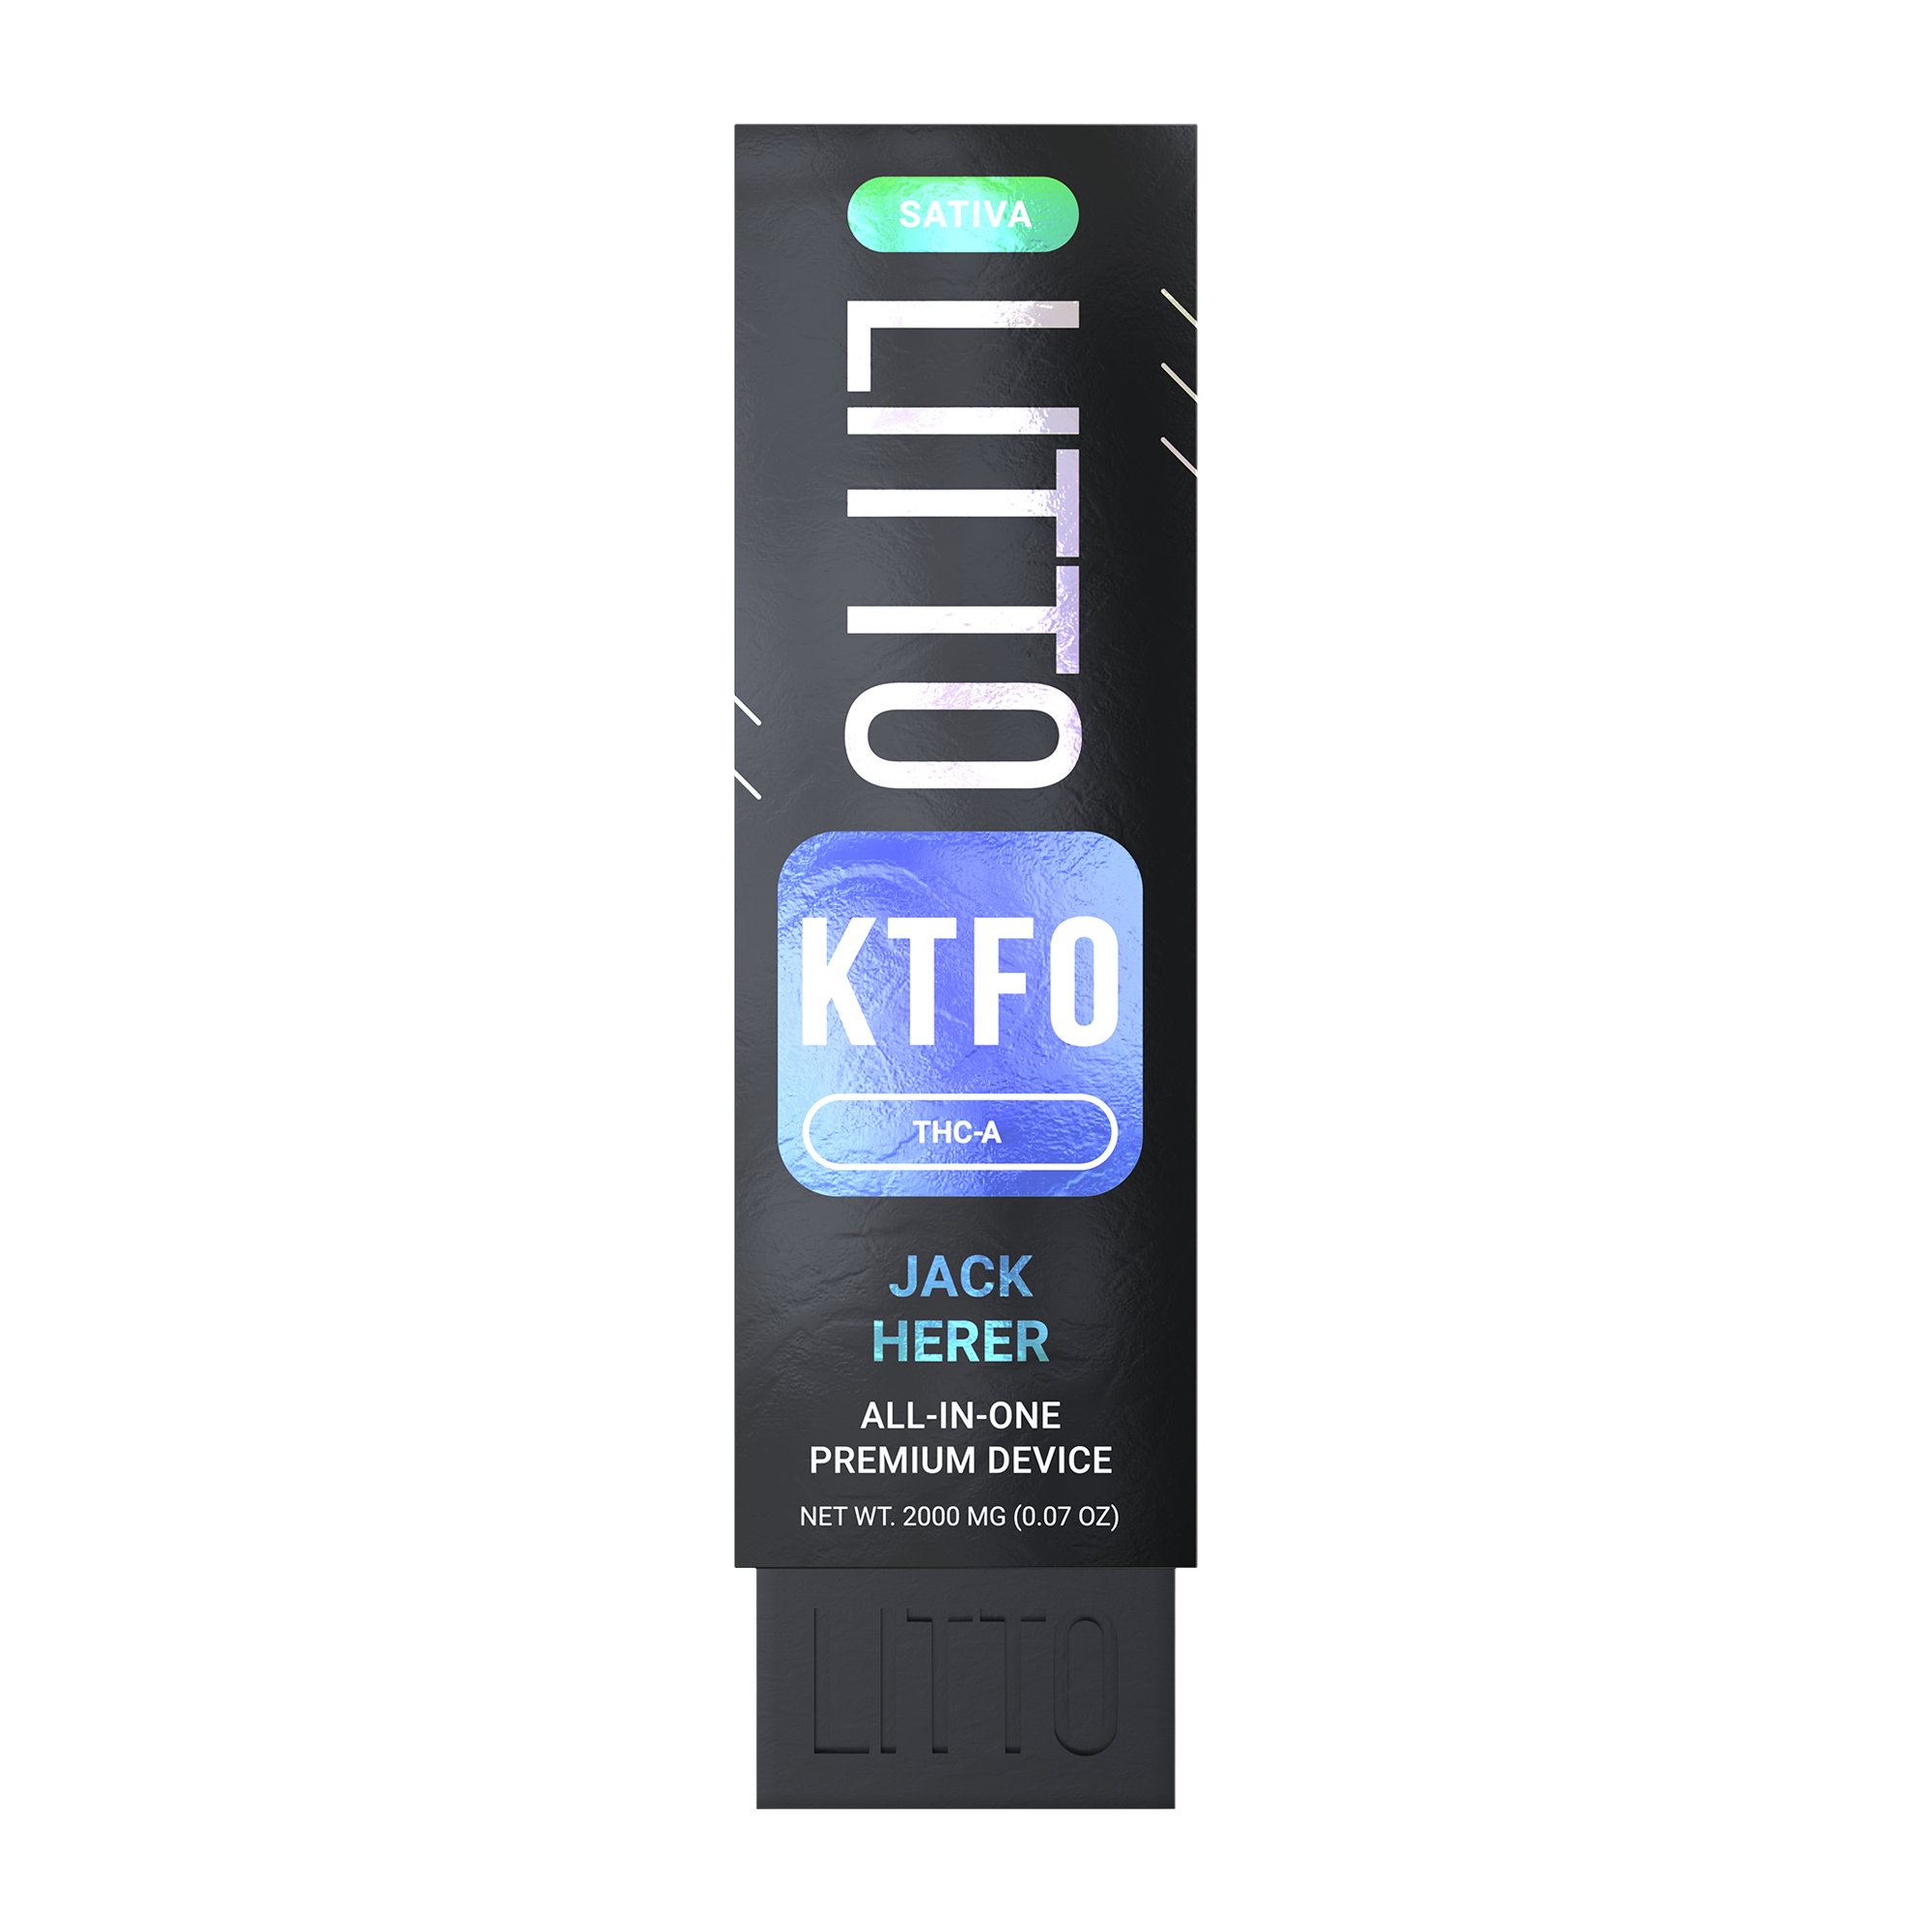 All-in-One Device - KTFO - Sativa - THCA - Jack Herer - 2G